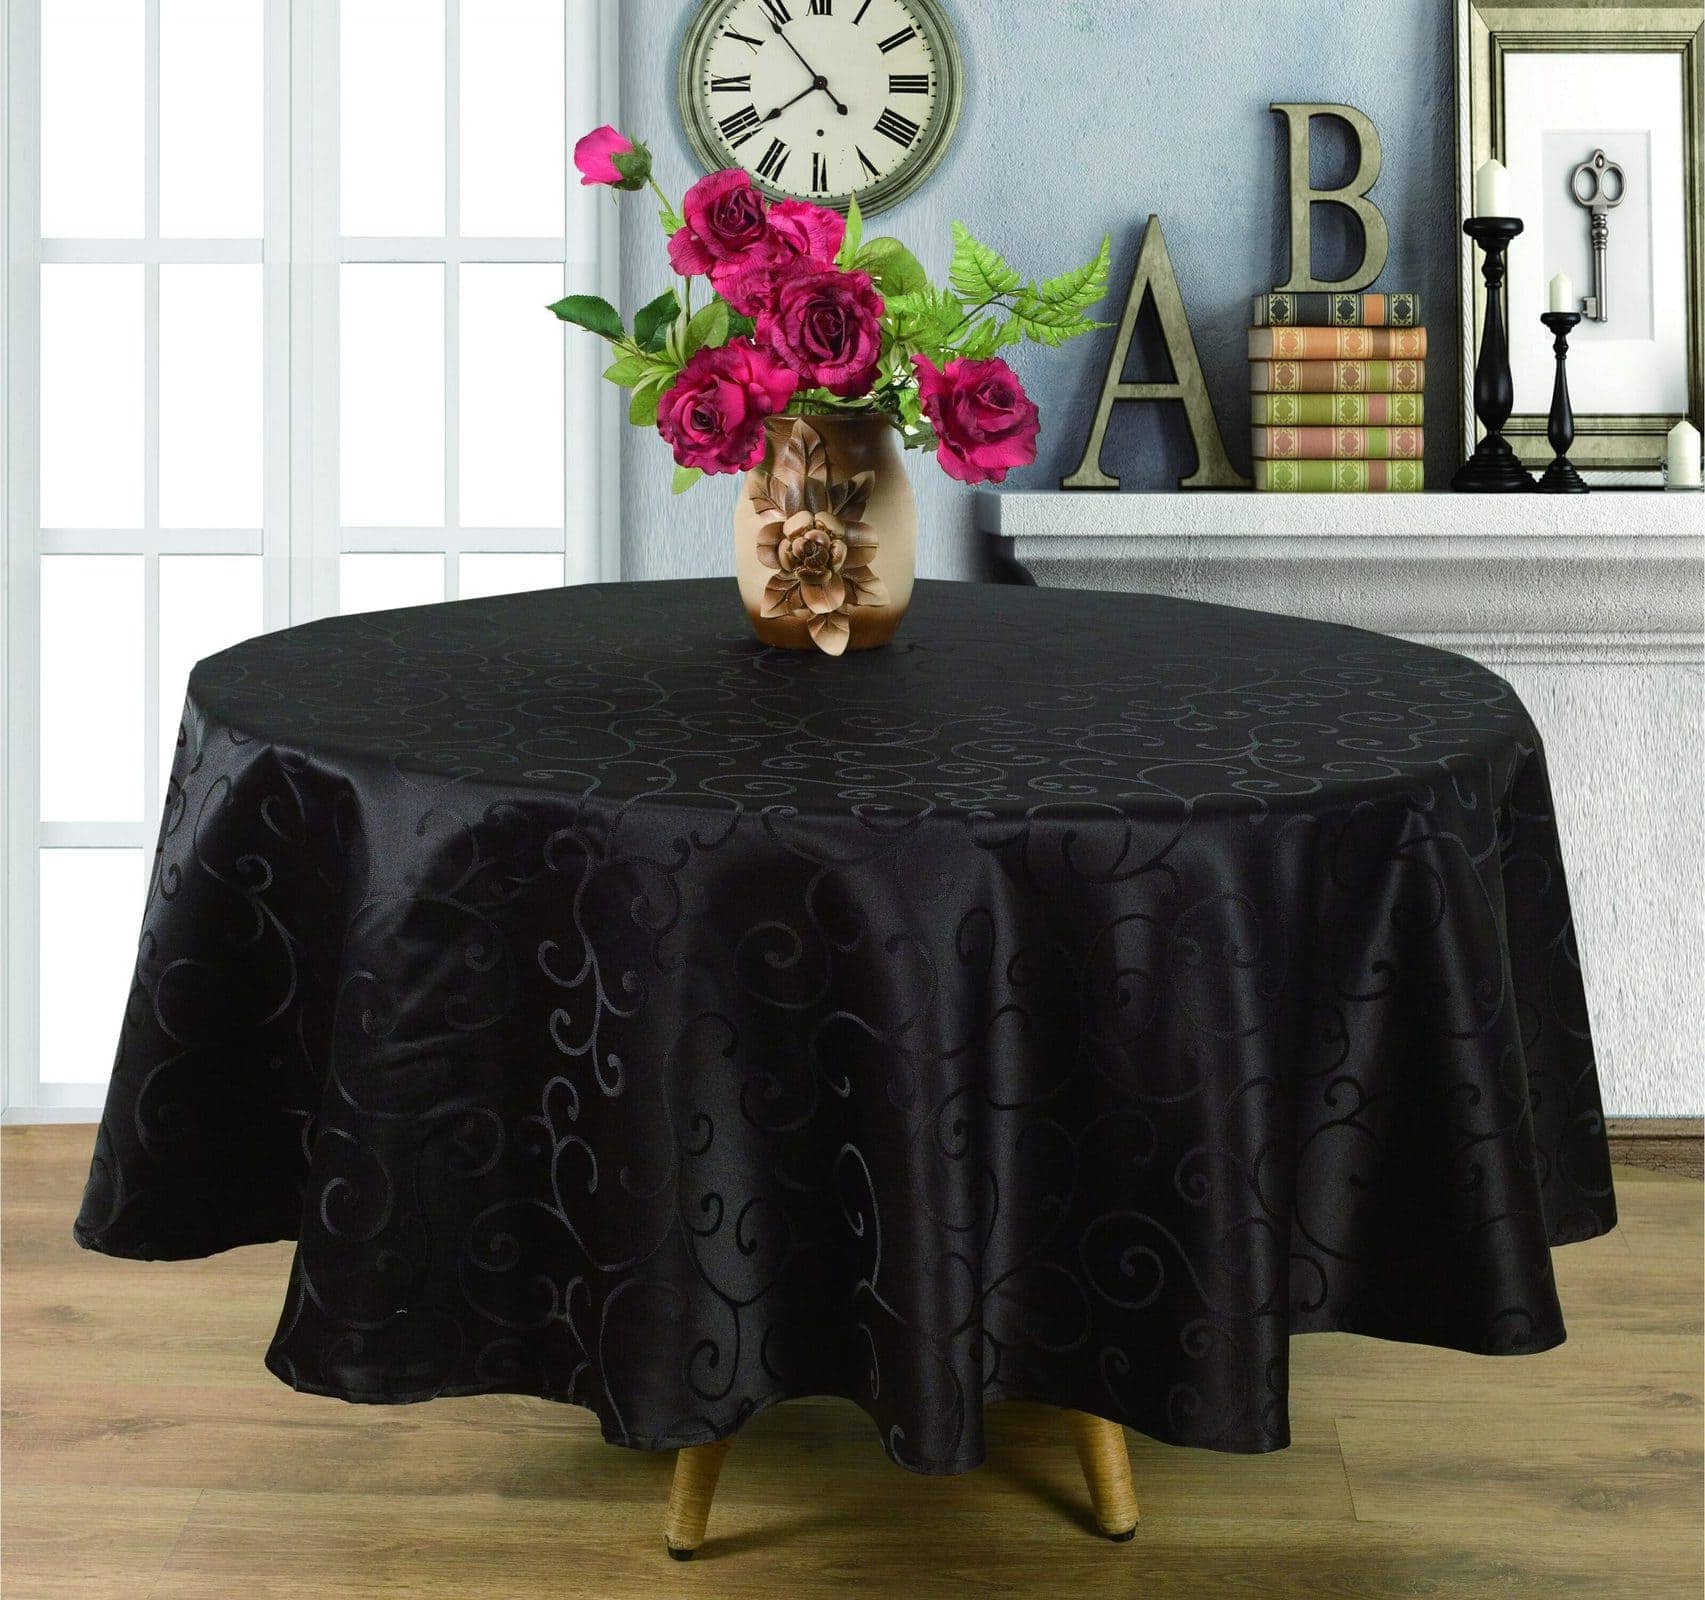 Choosing A Round Tablecloth